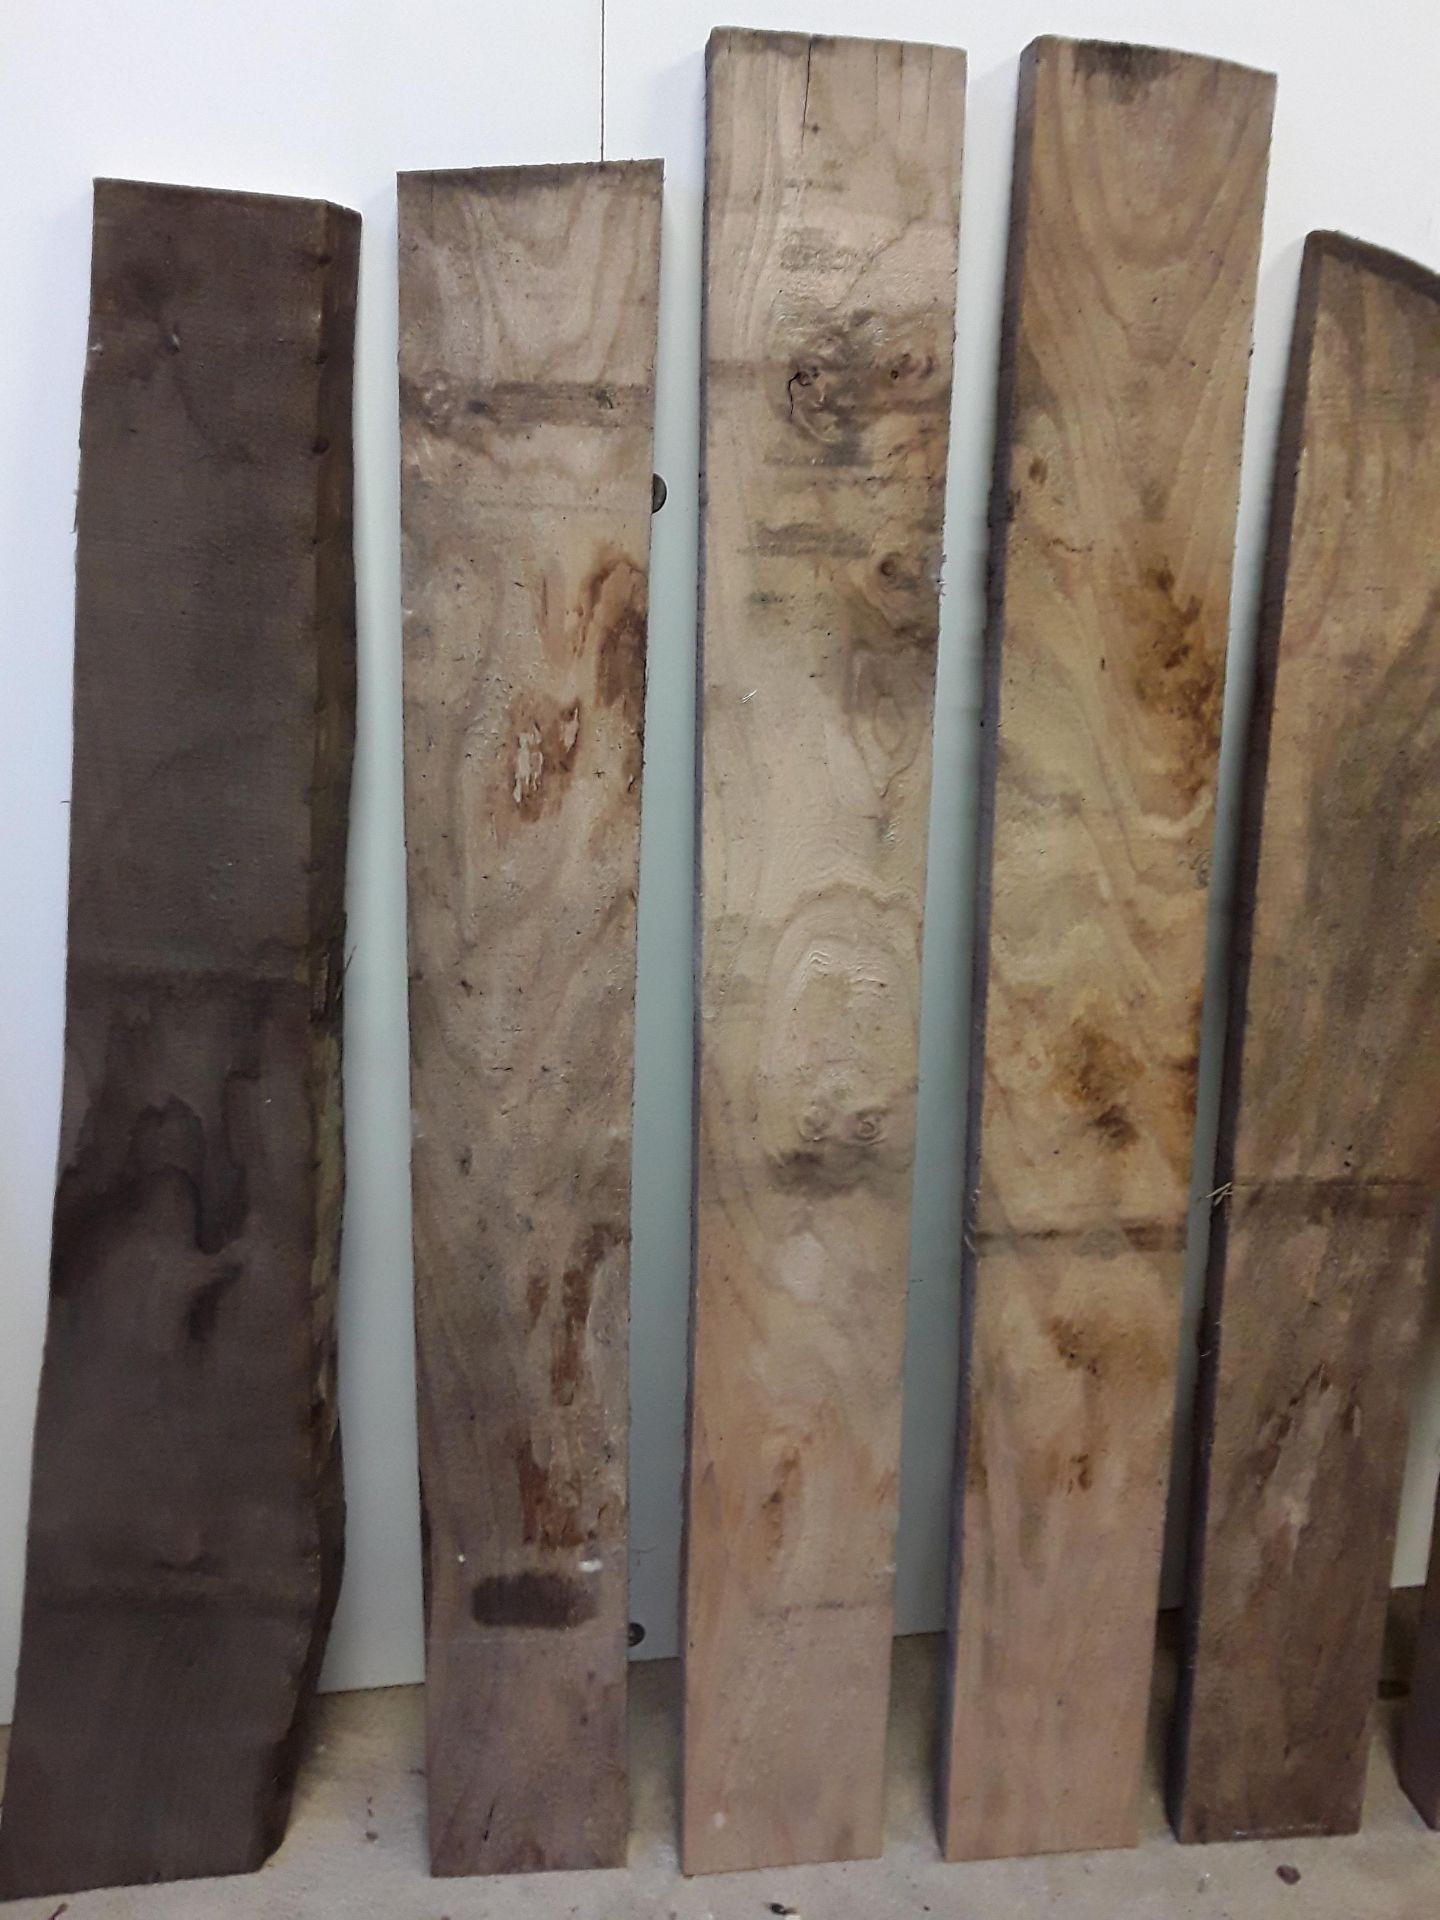 27 x Hardwood Timber Air Dried Sawn English Oak, Chestnut, Cherry, Elm Waney Edge / Square Edge Boar - Image 8 of 11